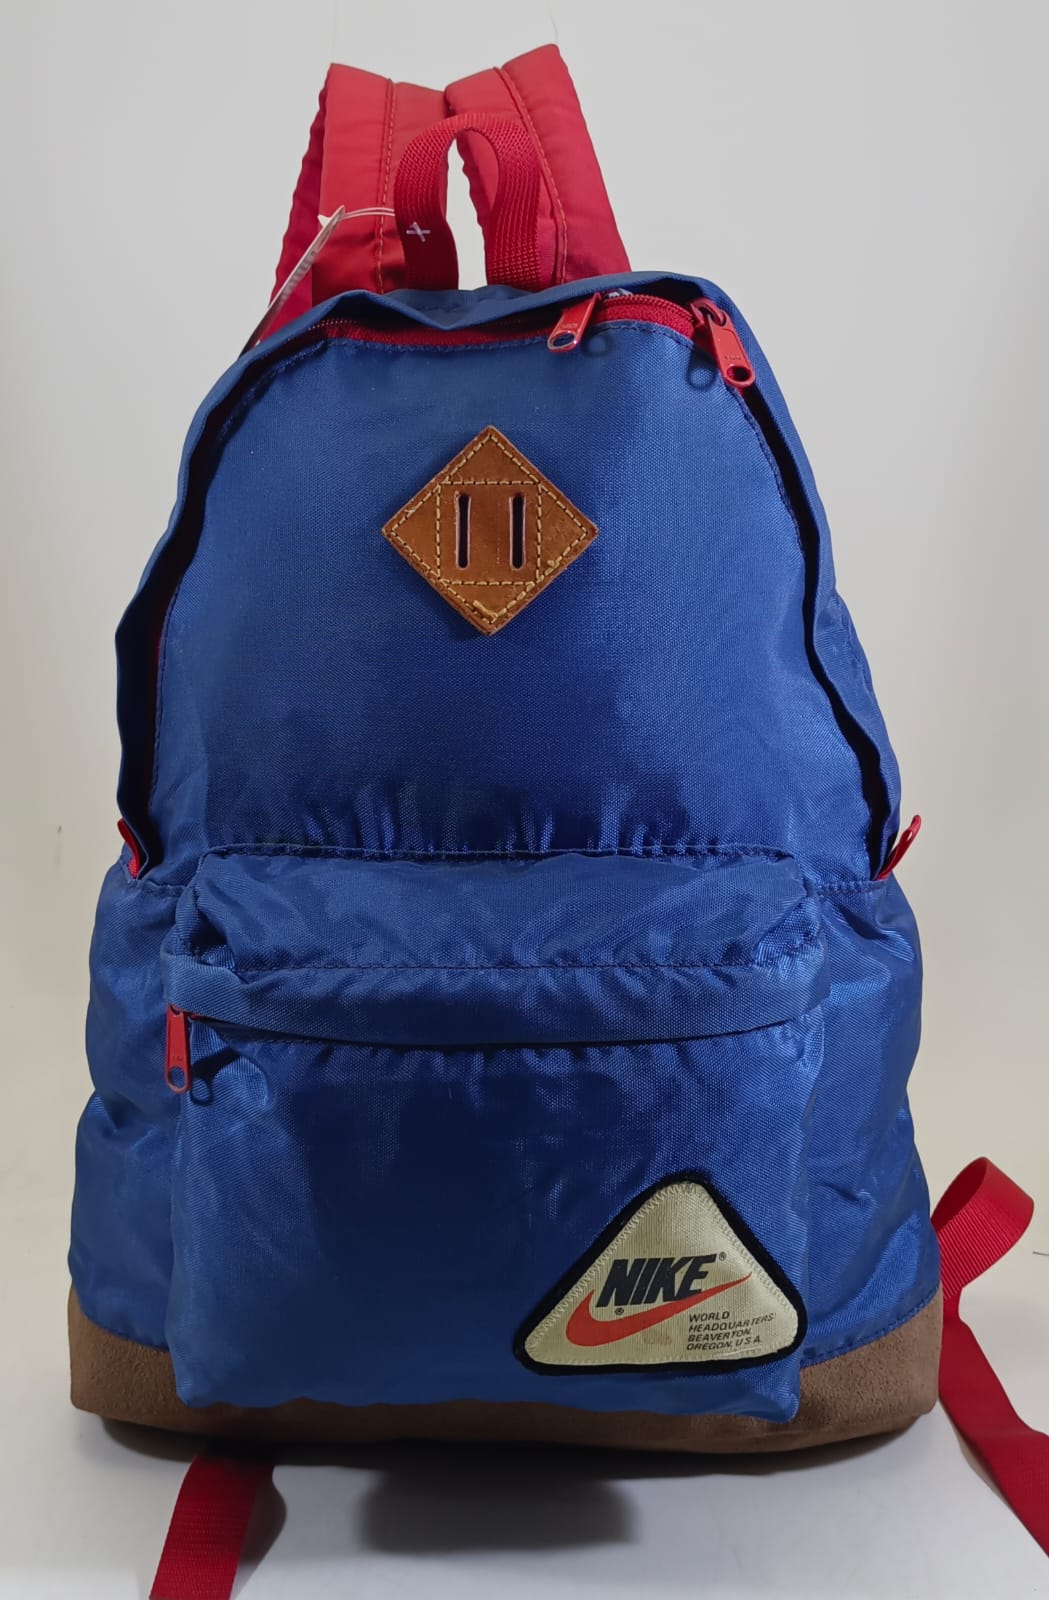 Blue Nike School Bag